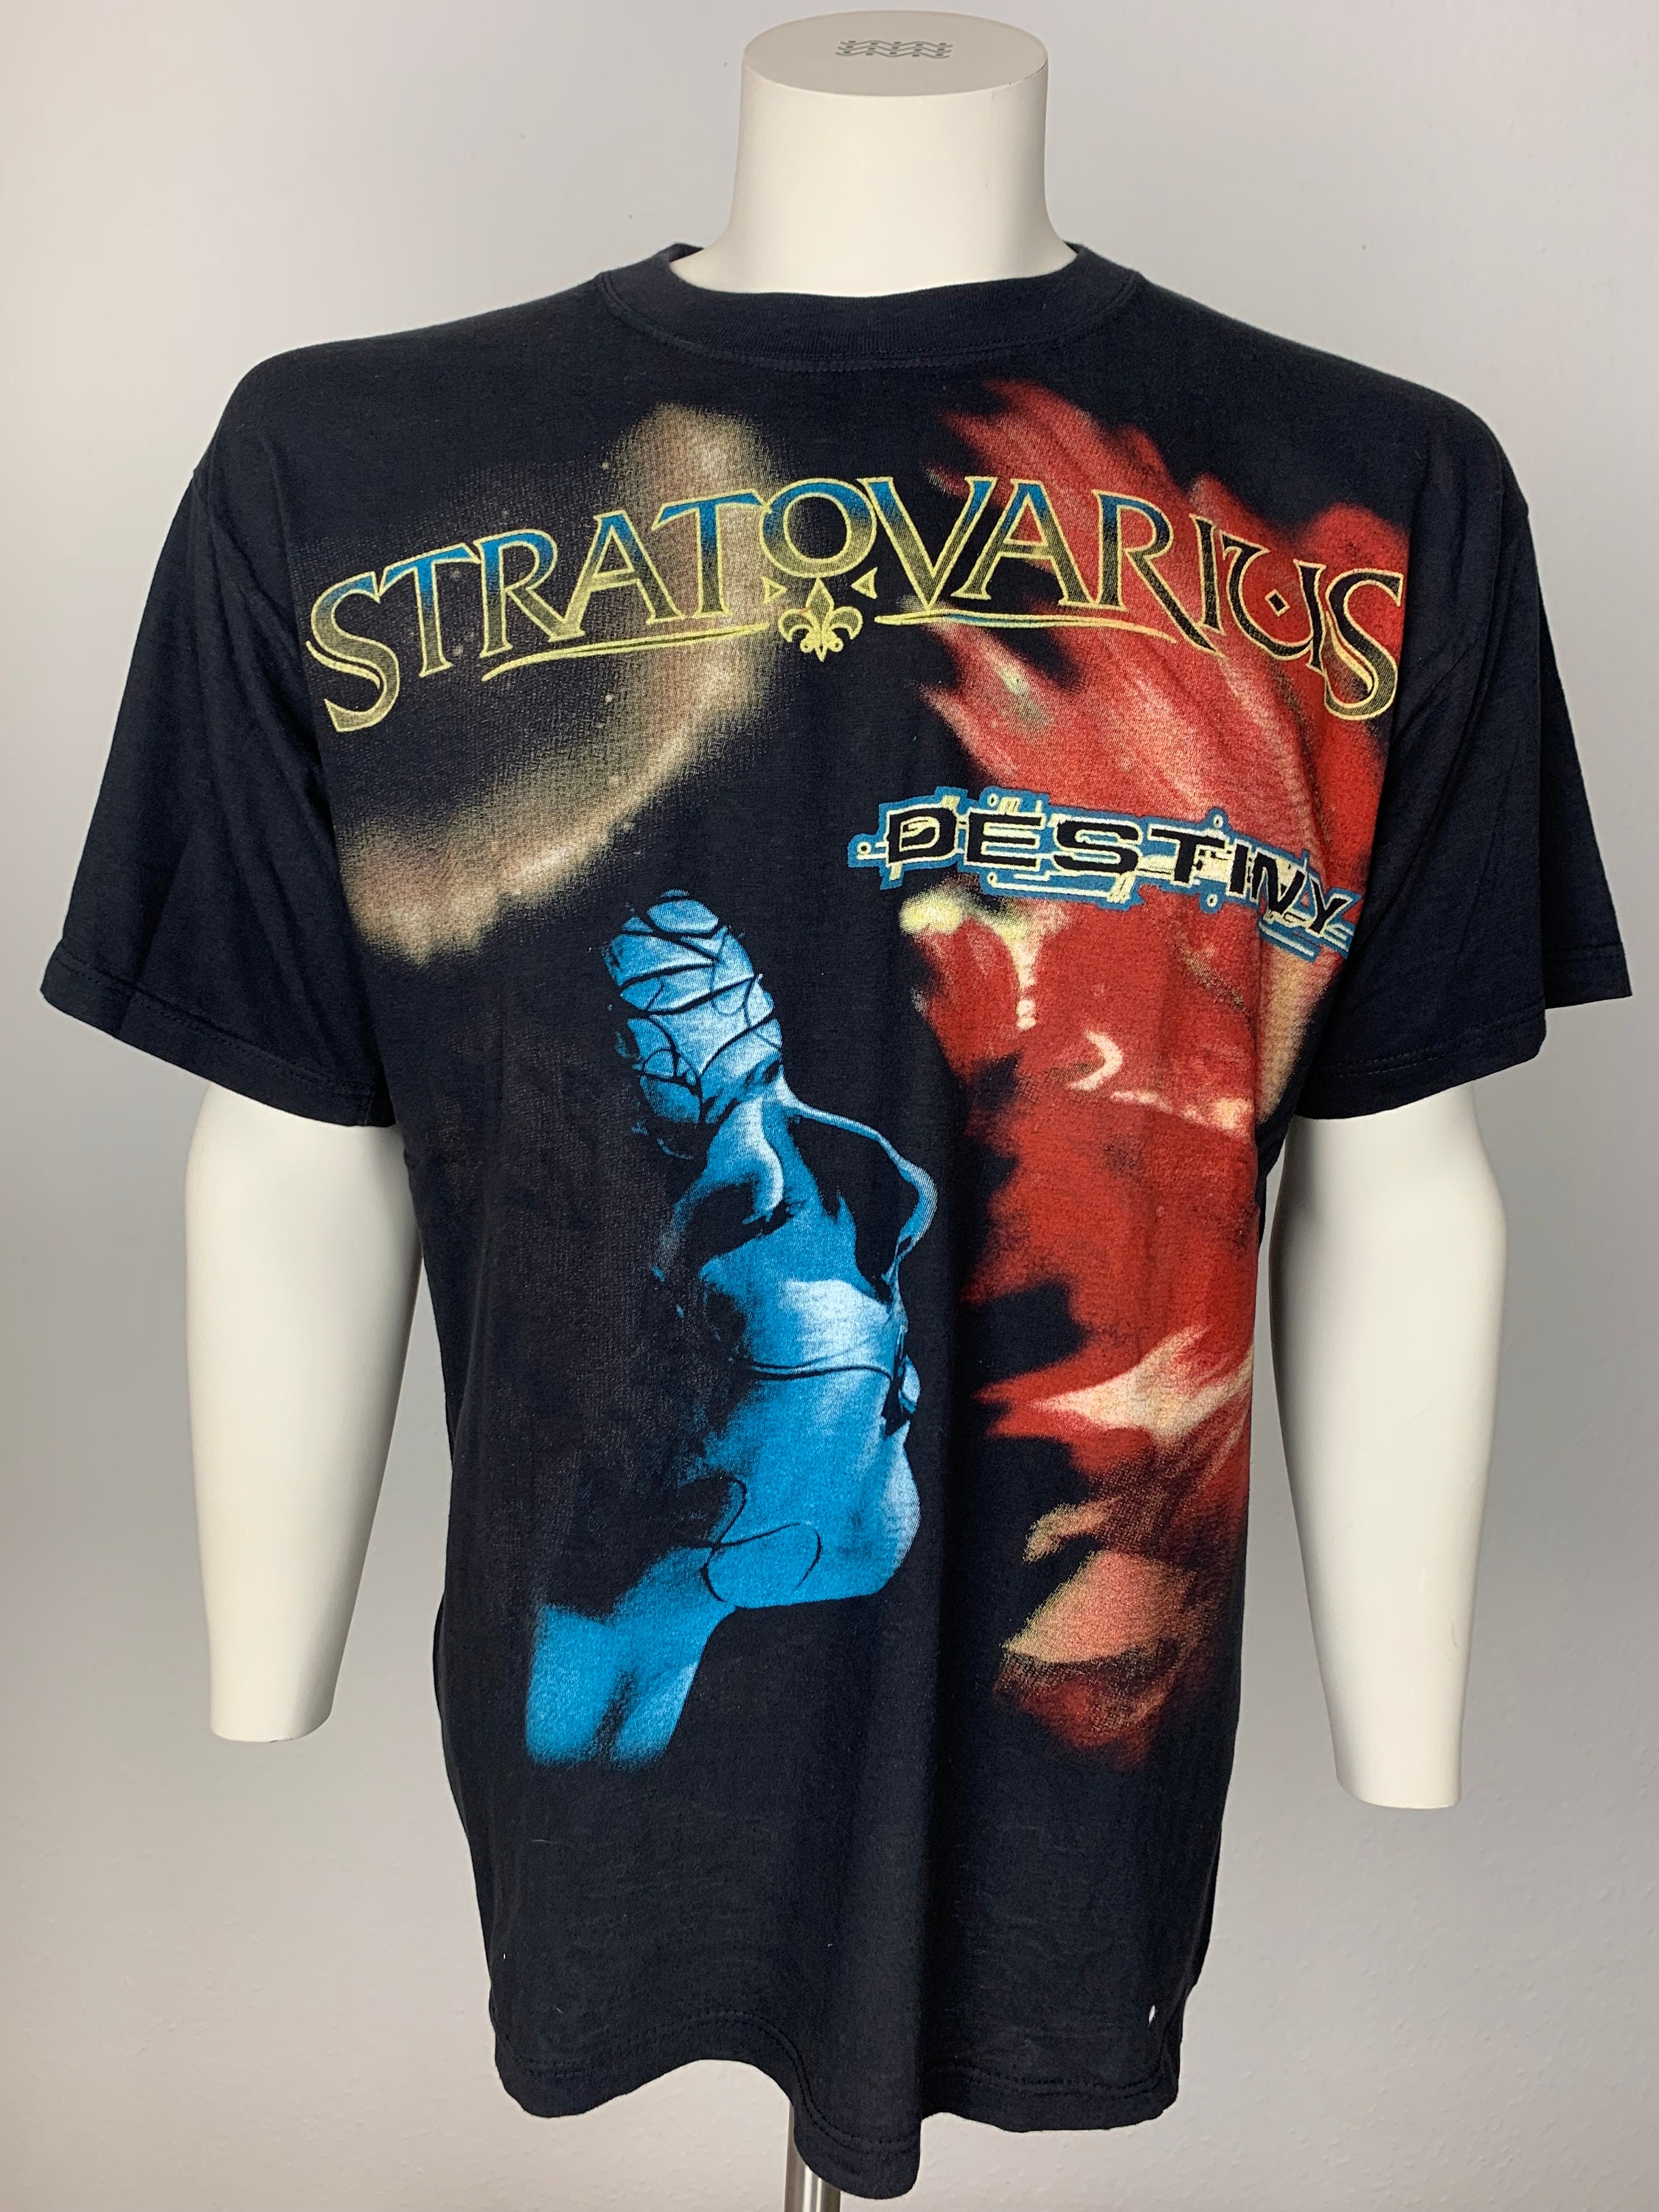 Stratovarius The Chosen Ones Album Cover T-Shirt White